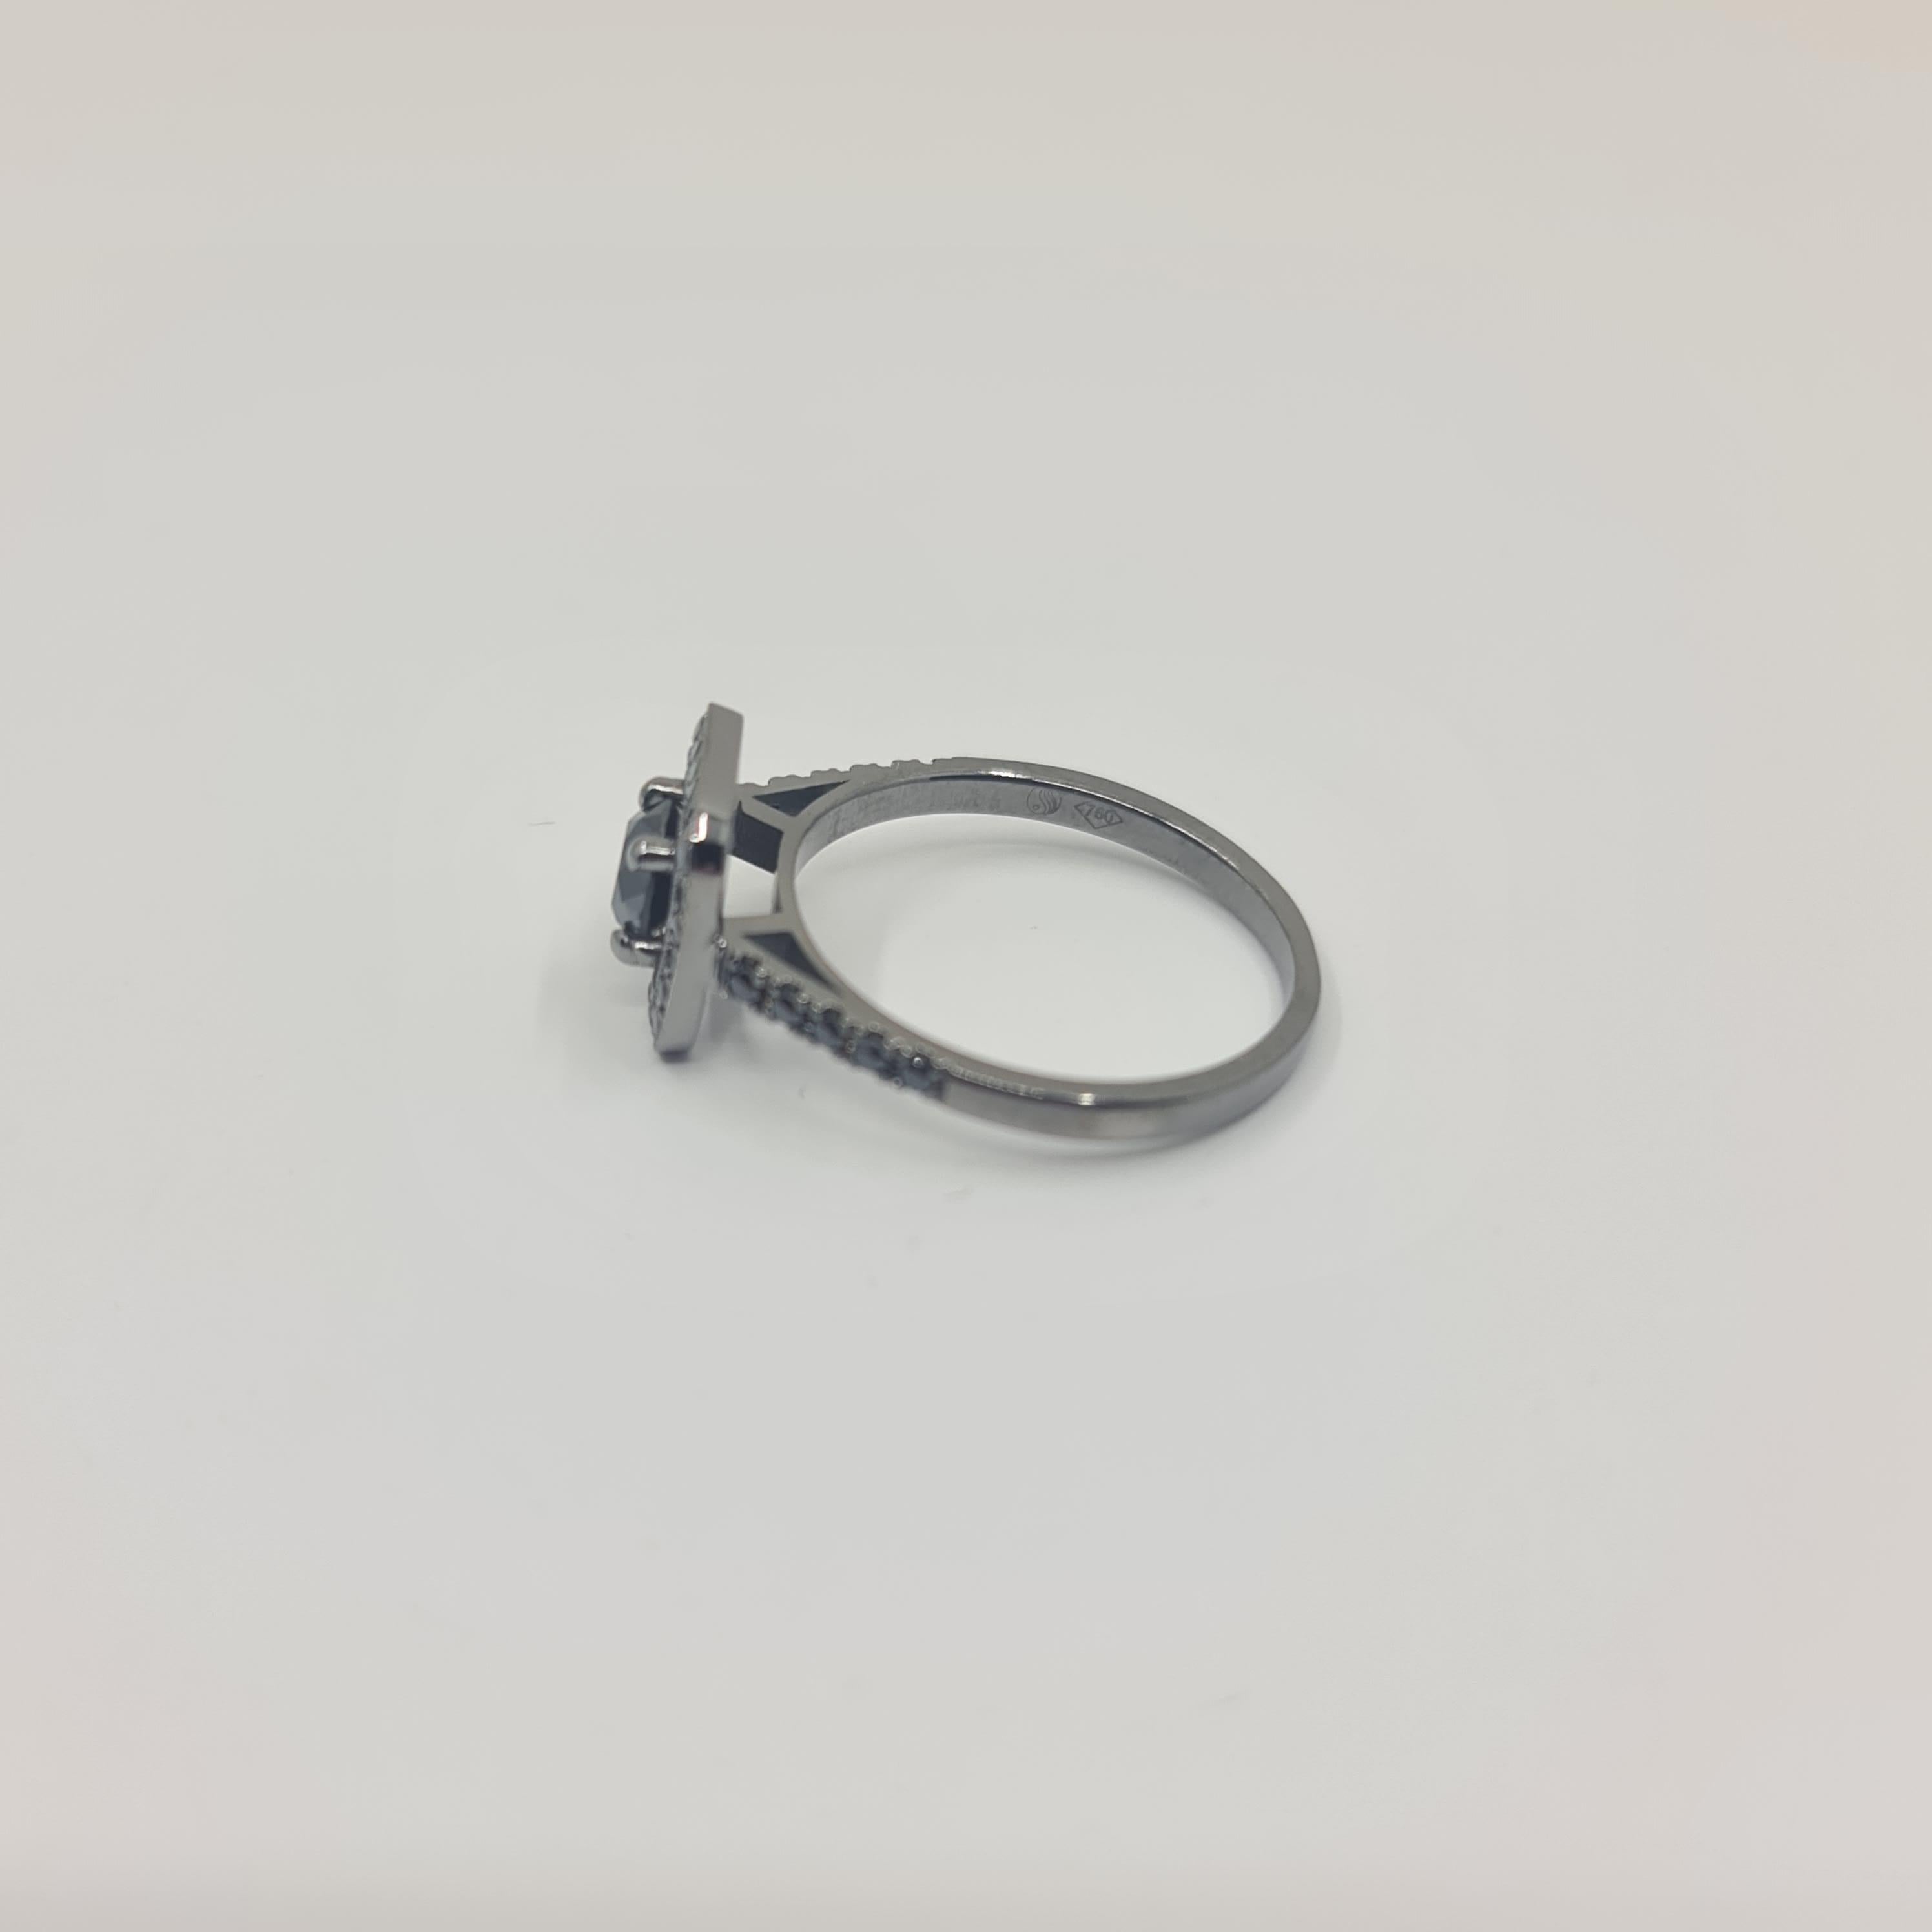 Brilliant Cut Exquisite Black Diamond Halo Ring 0.88 Carat in 18K Black Gold Round Cut For Sale